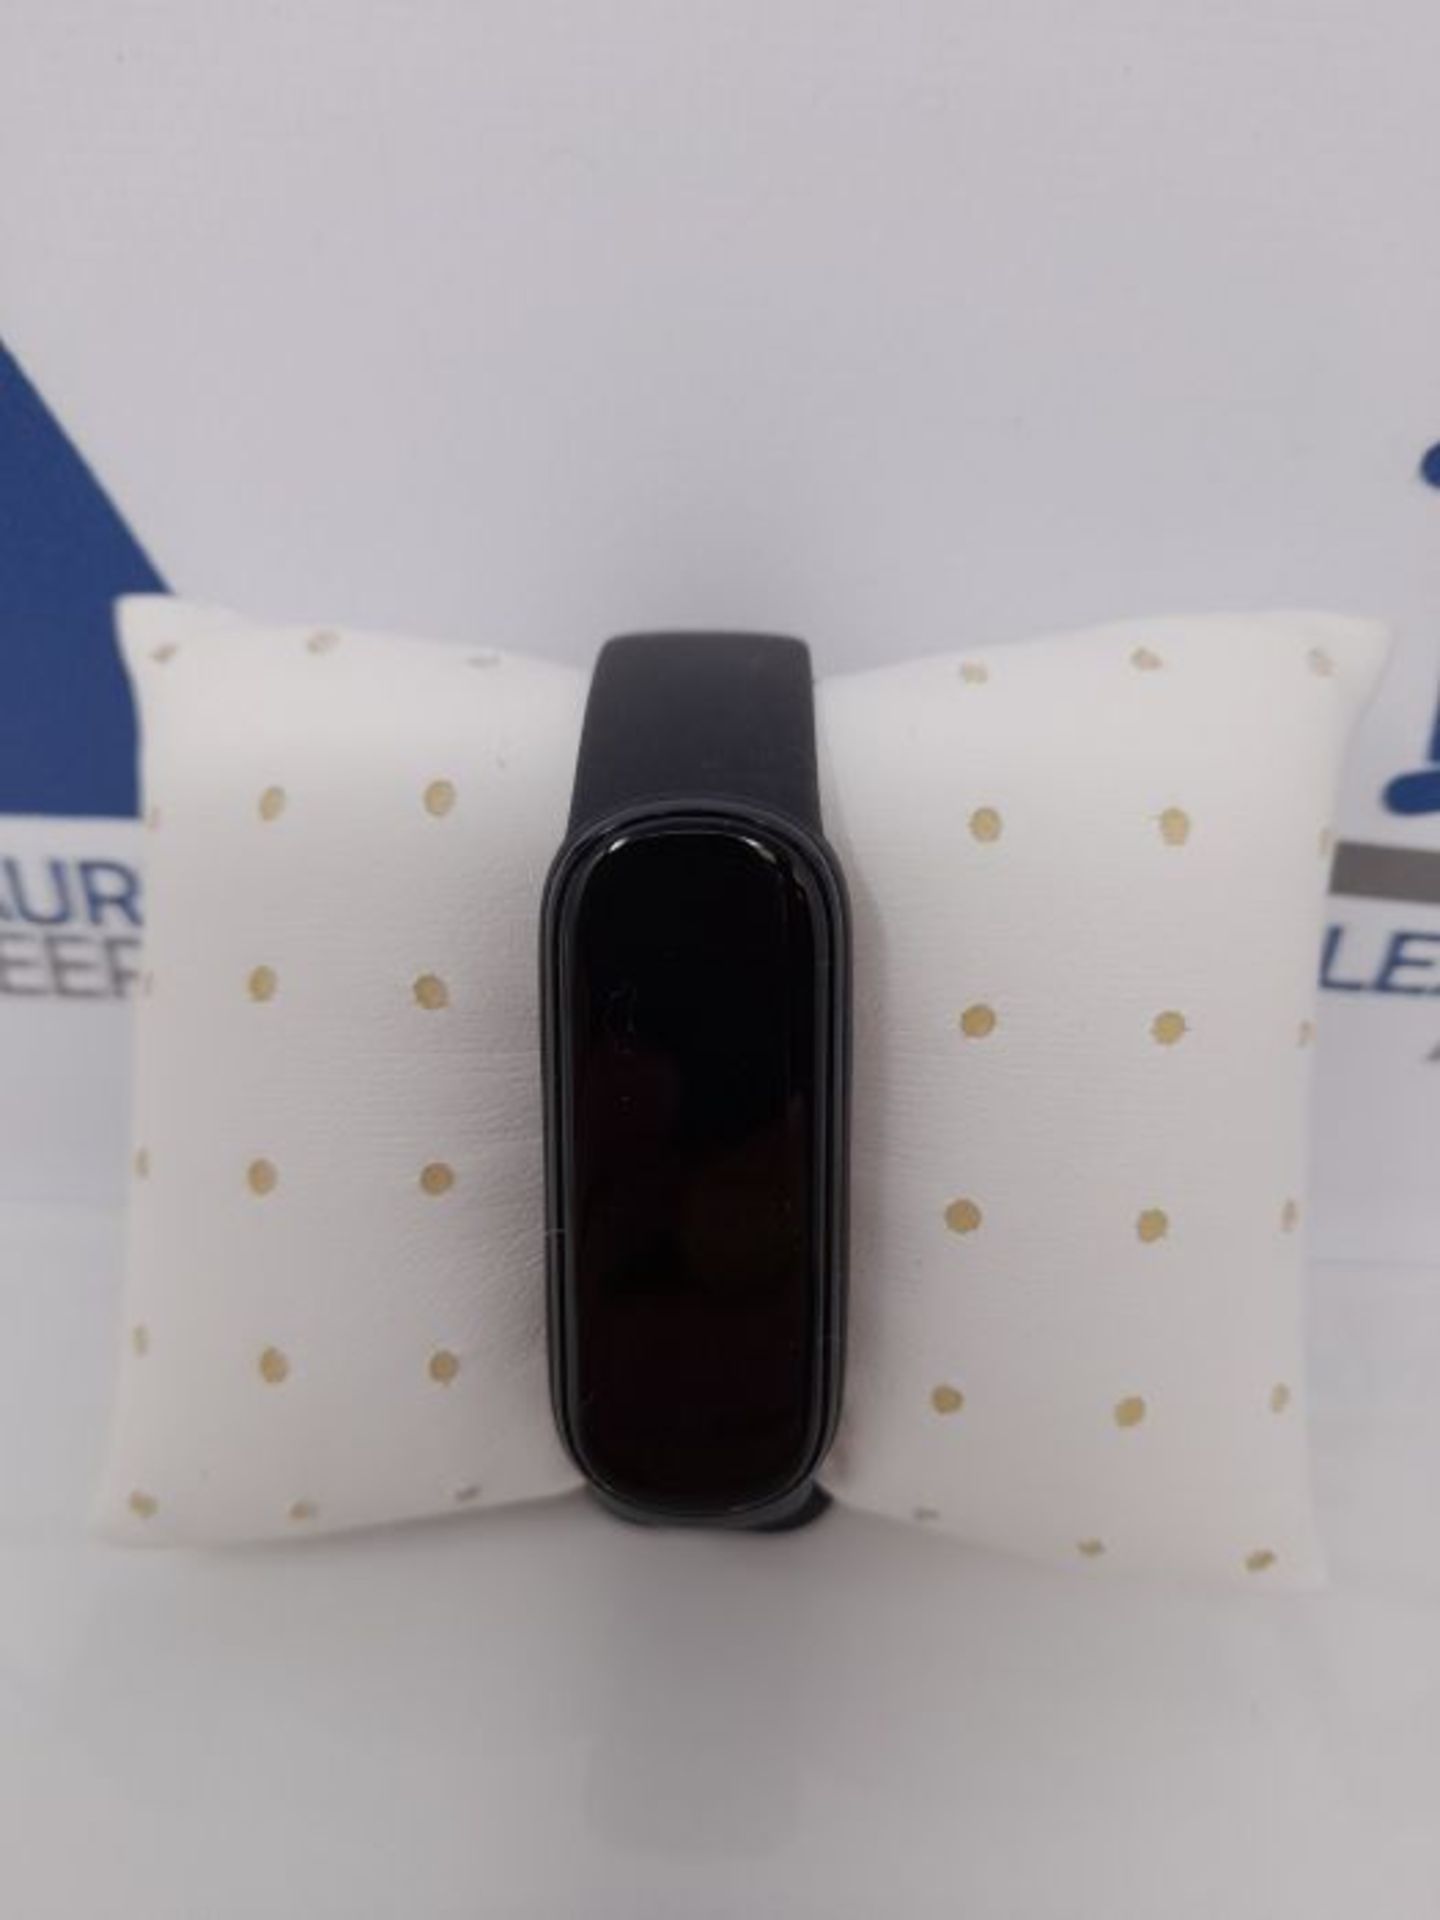 Amazfit Smartwatch Band 5 Fitness Tracker Armband mit integrierter Alexa, 15 Tagen Akk - Image 3 of 3